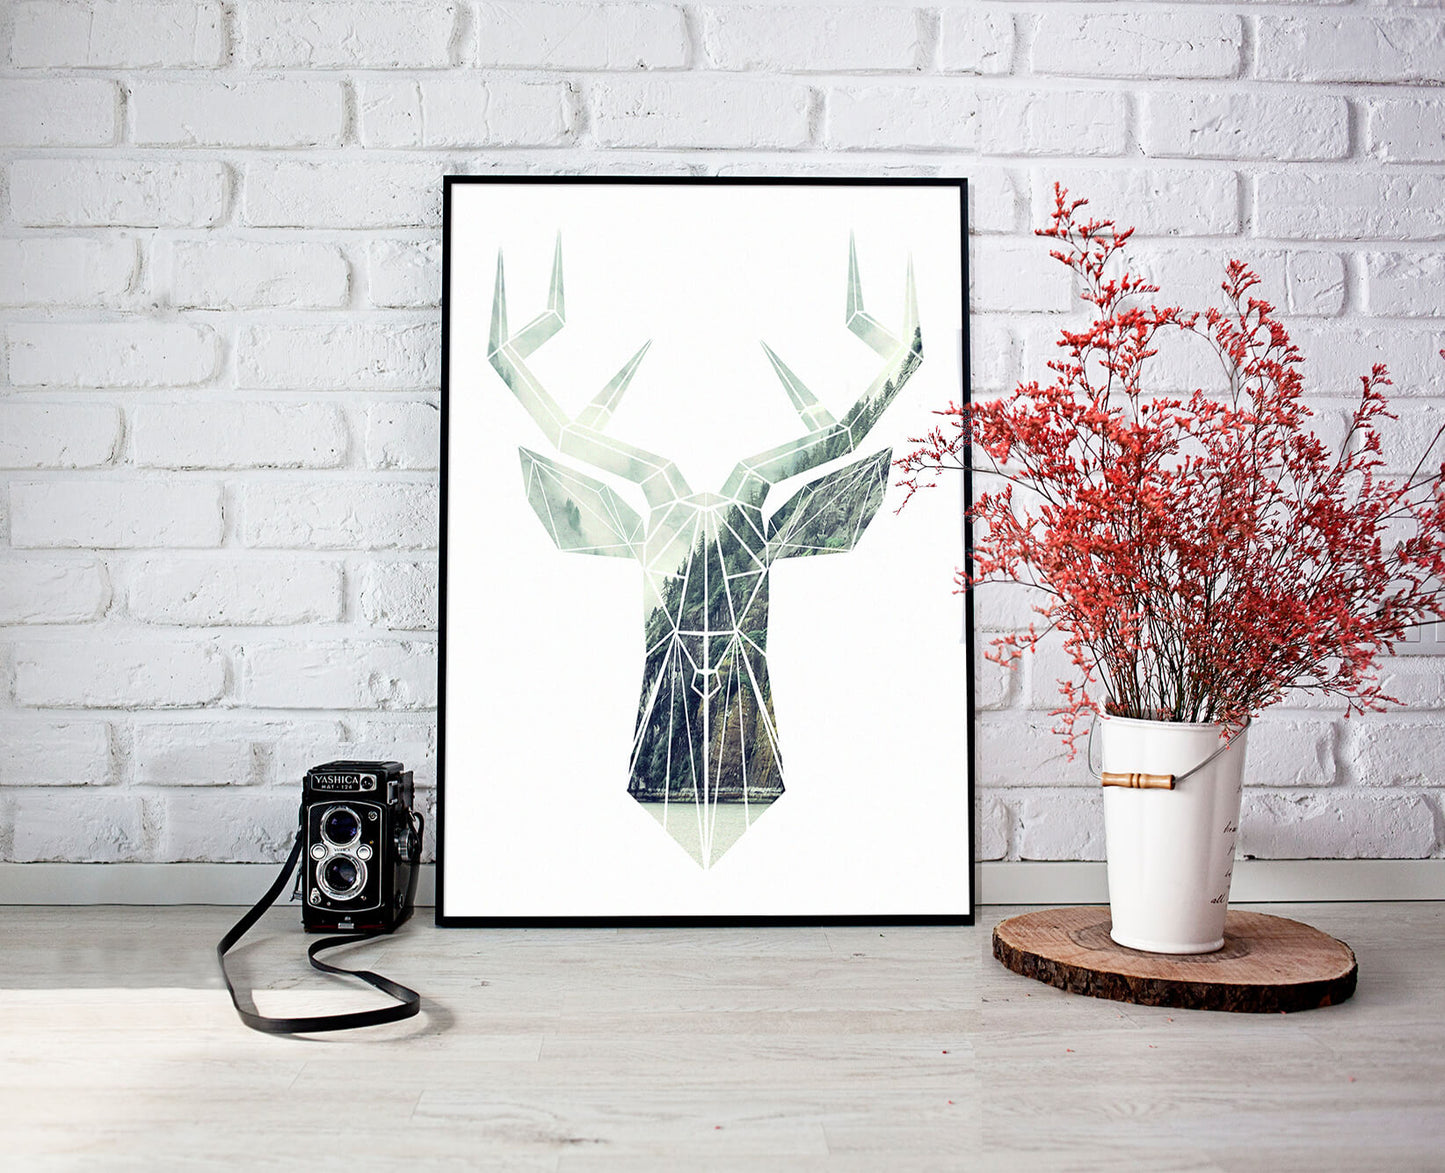 Gray deer art, Print Gift idea, Deer head illustration, Gray deer art by  Joanna Szmerdt